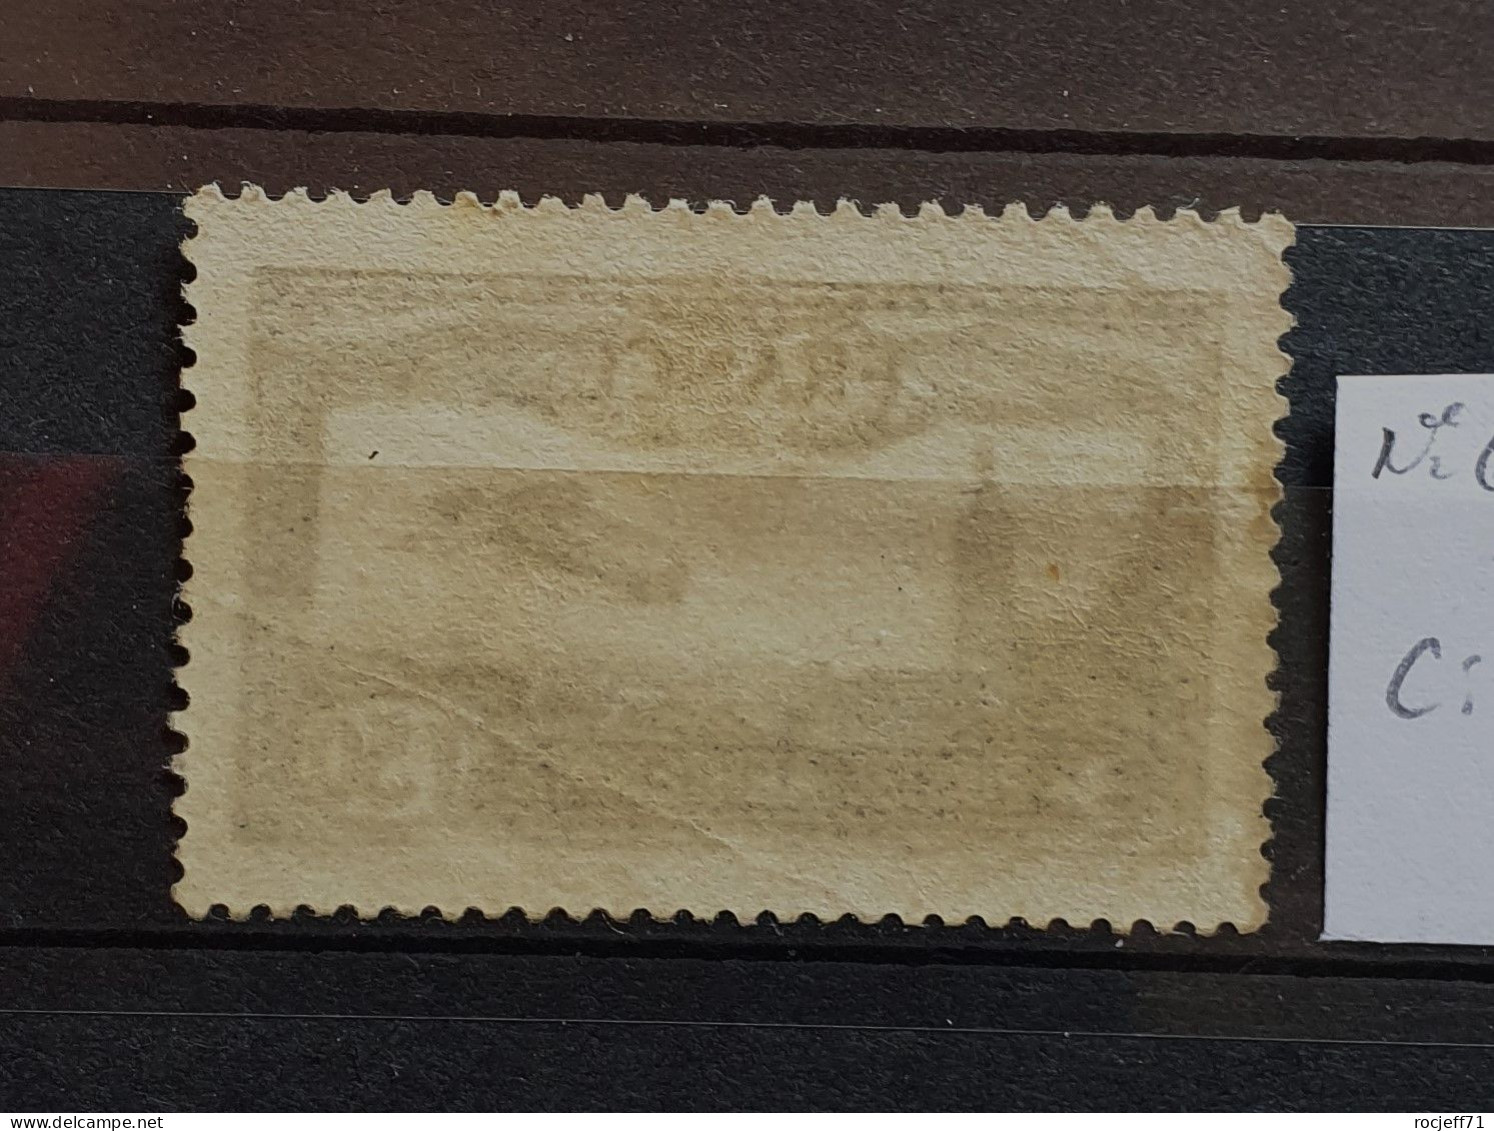 05 - 24 - France - Poste Aérienne N°6 * - MH - 1927-1959 Mint/hinged